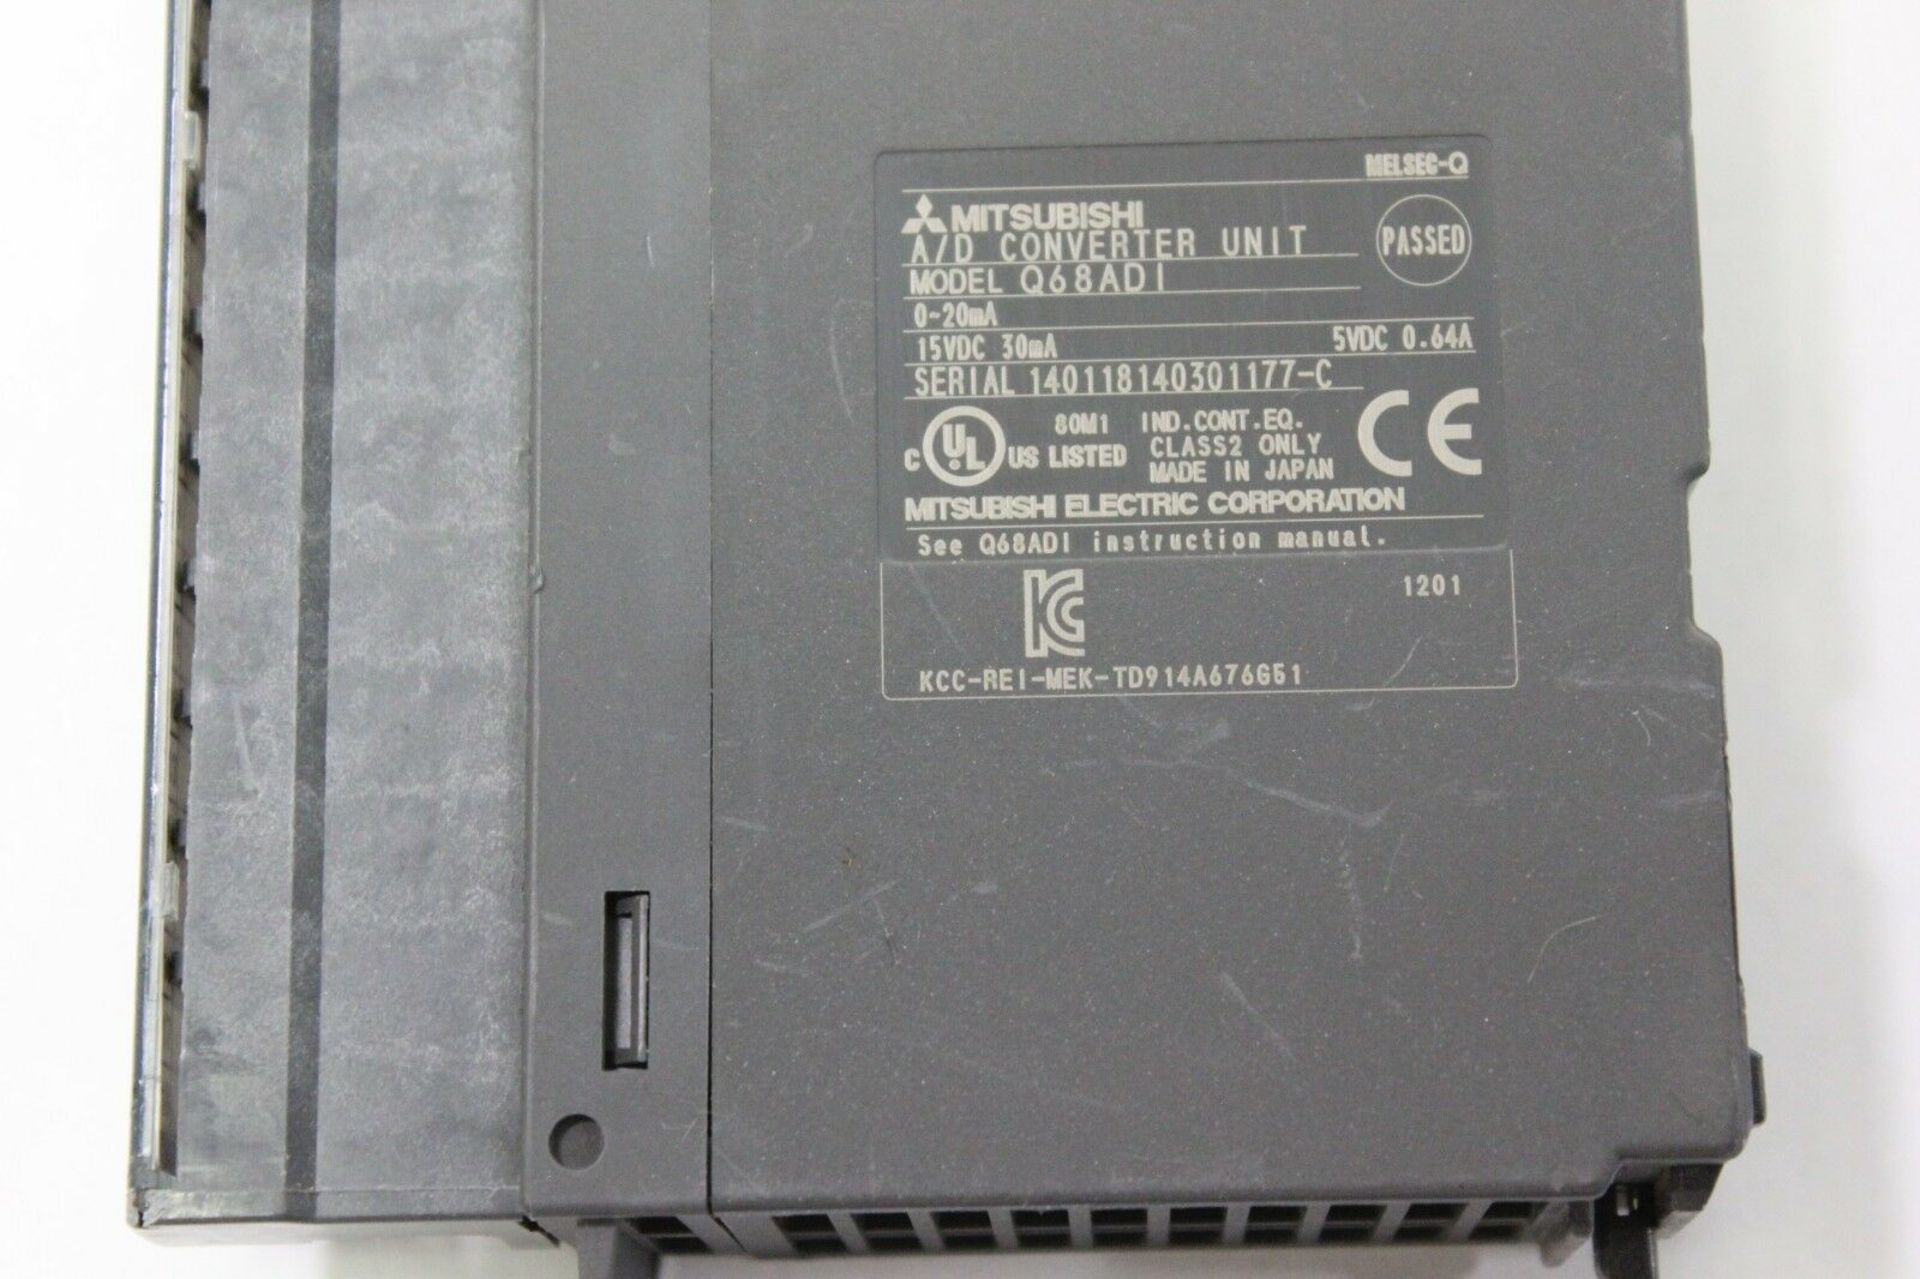 Mitsubishi A/D Converter Unit PLC Module - Image 2 of 2